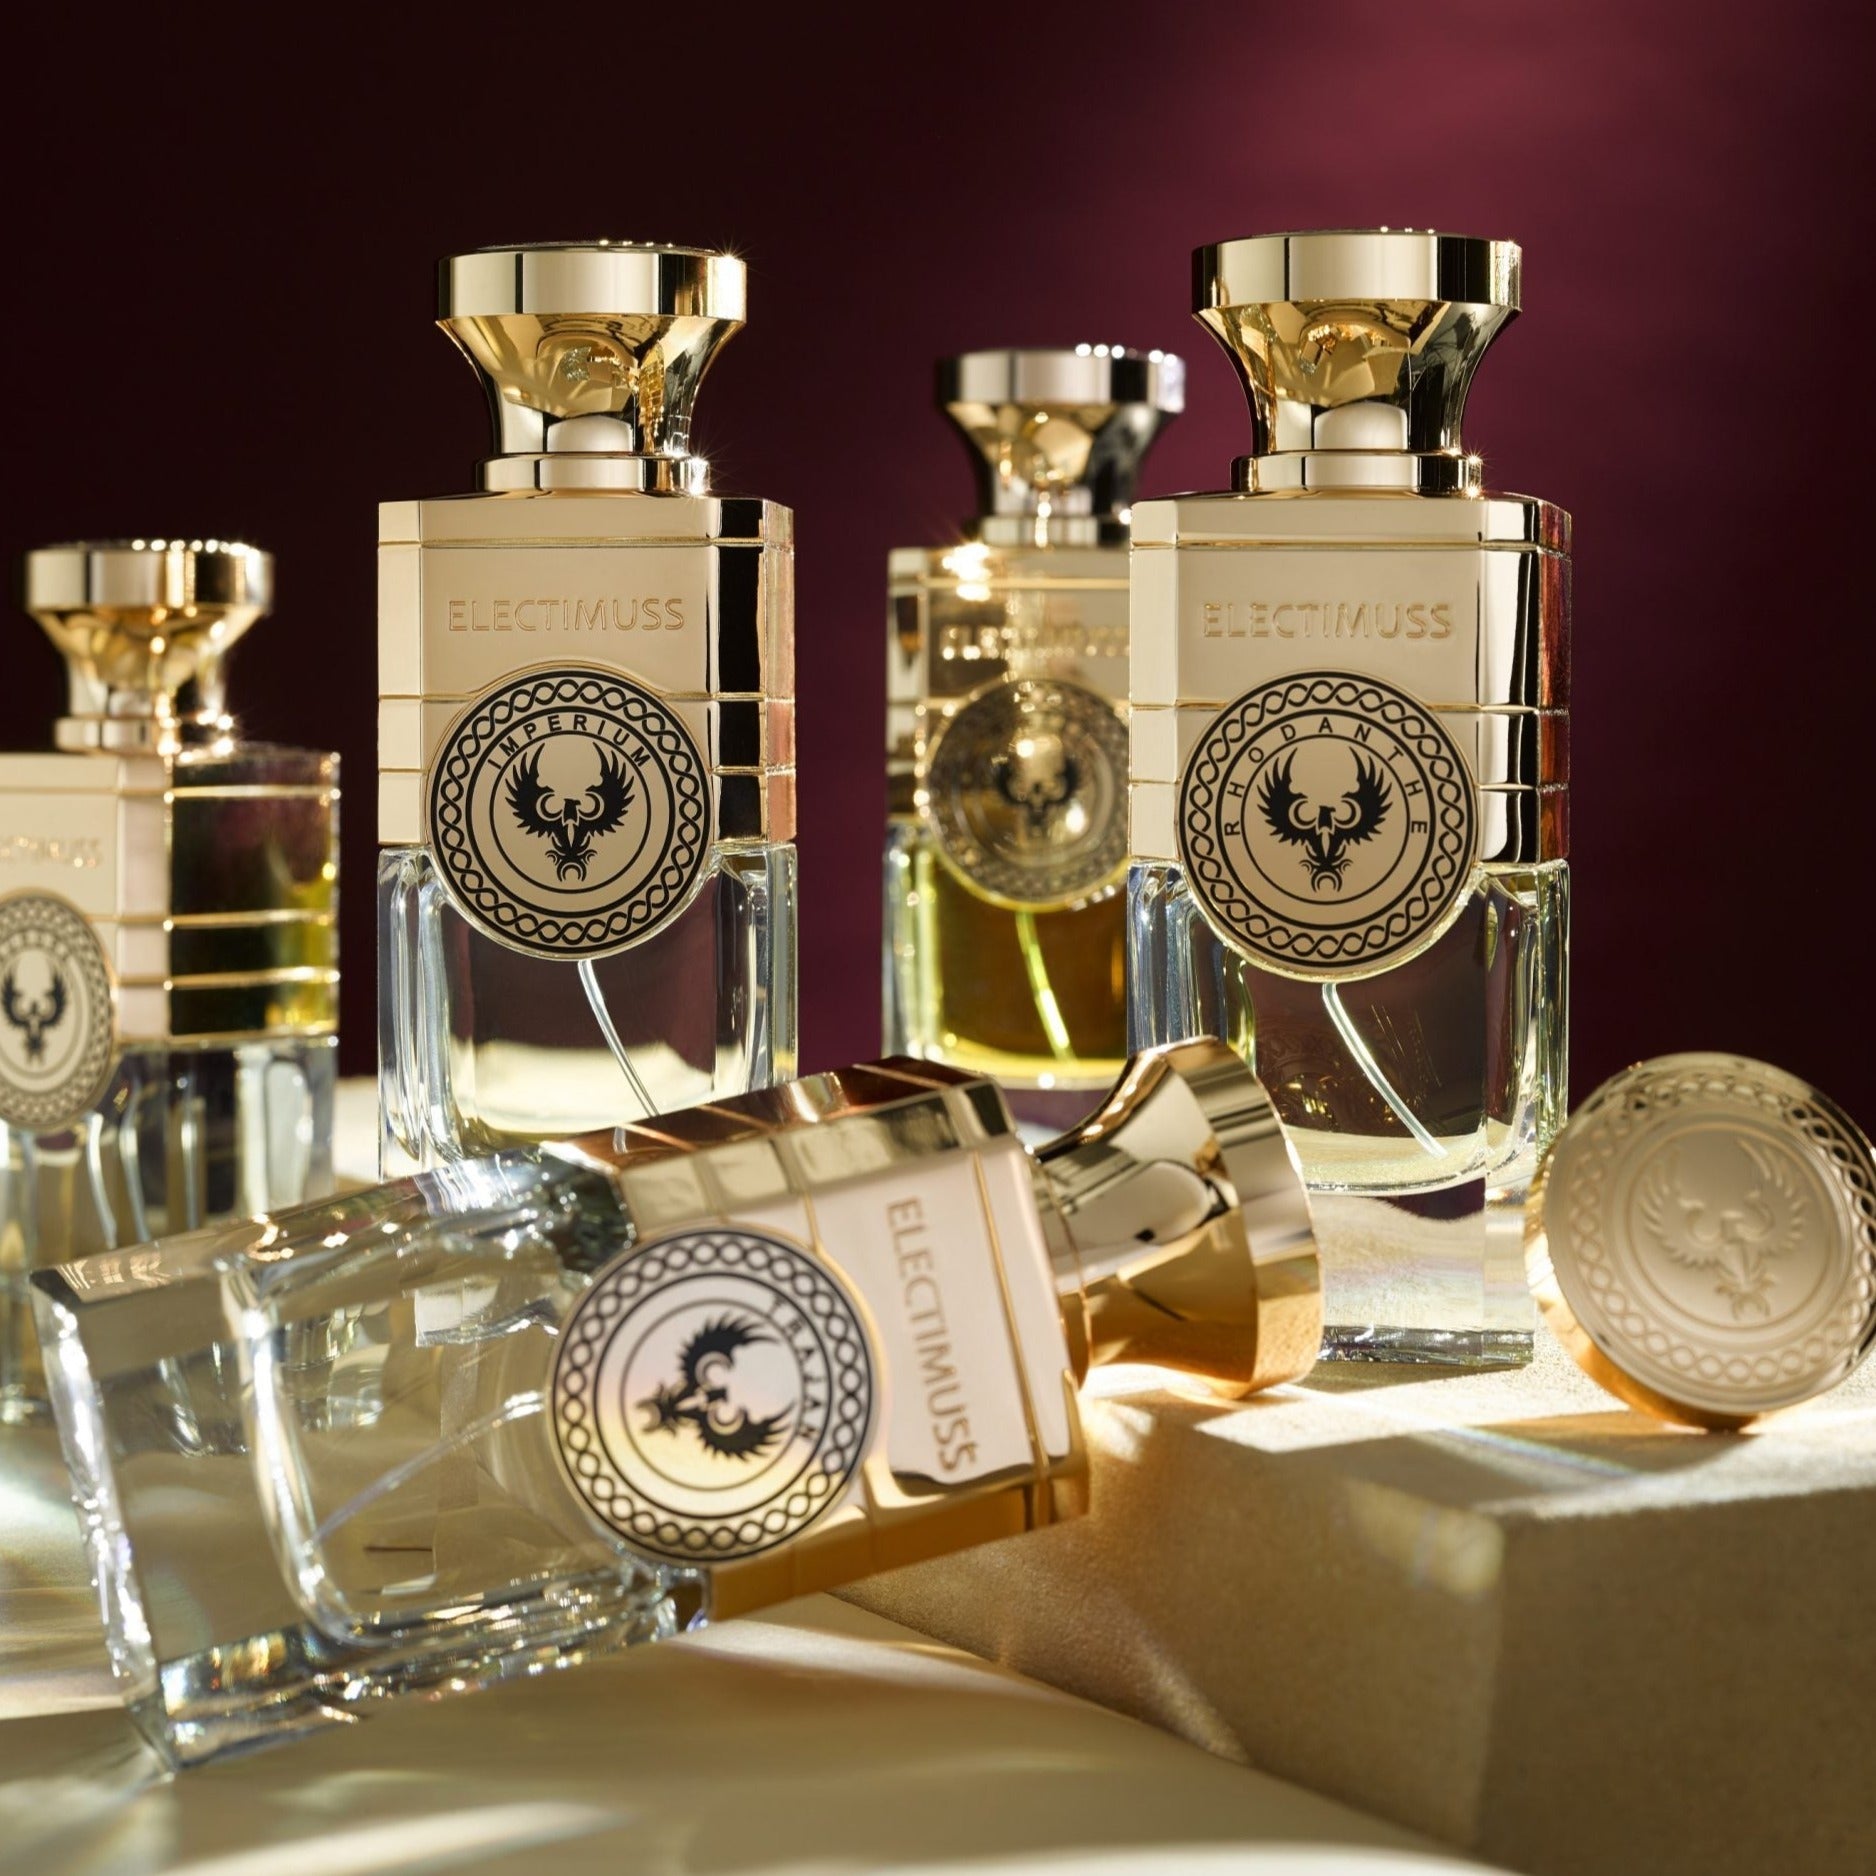 Electimuss Eternal Collection Rhodanthe Pure Parfum | My Perfume Shop Australia